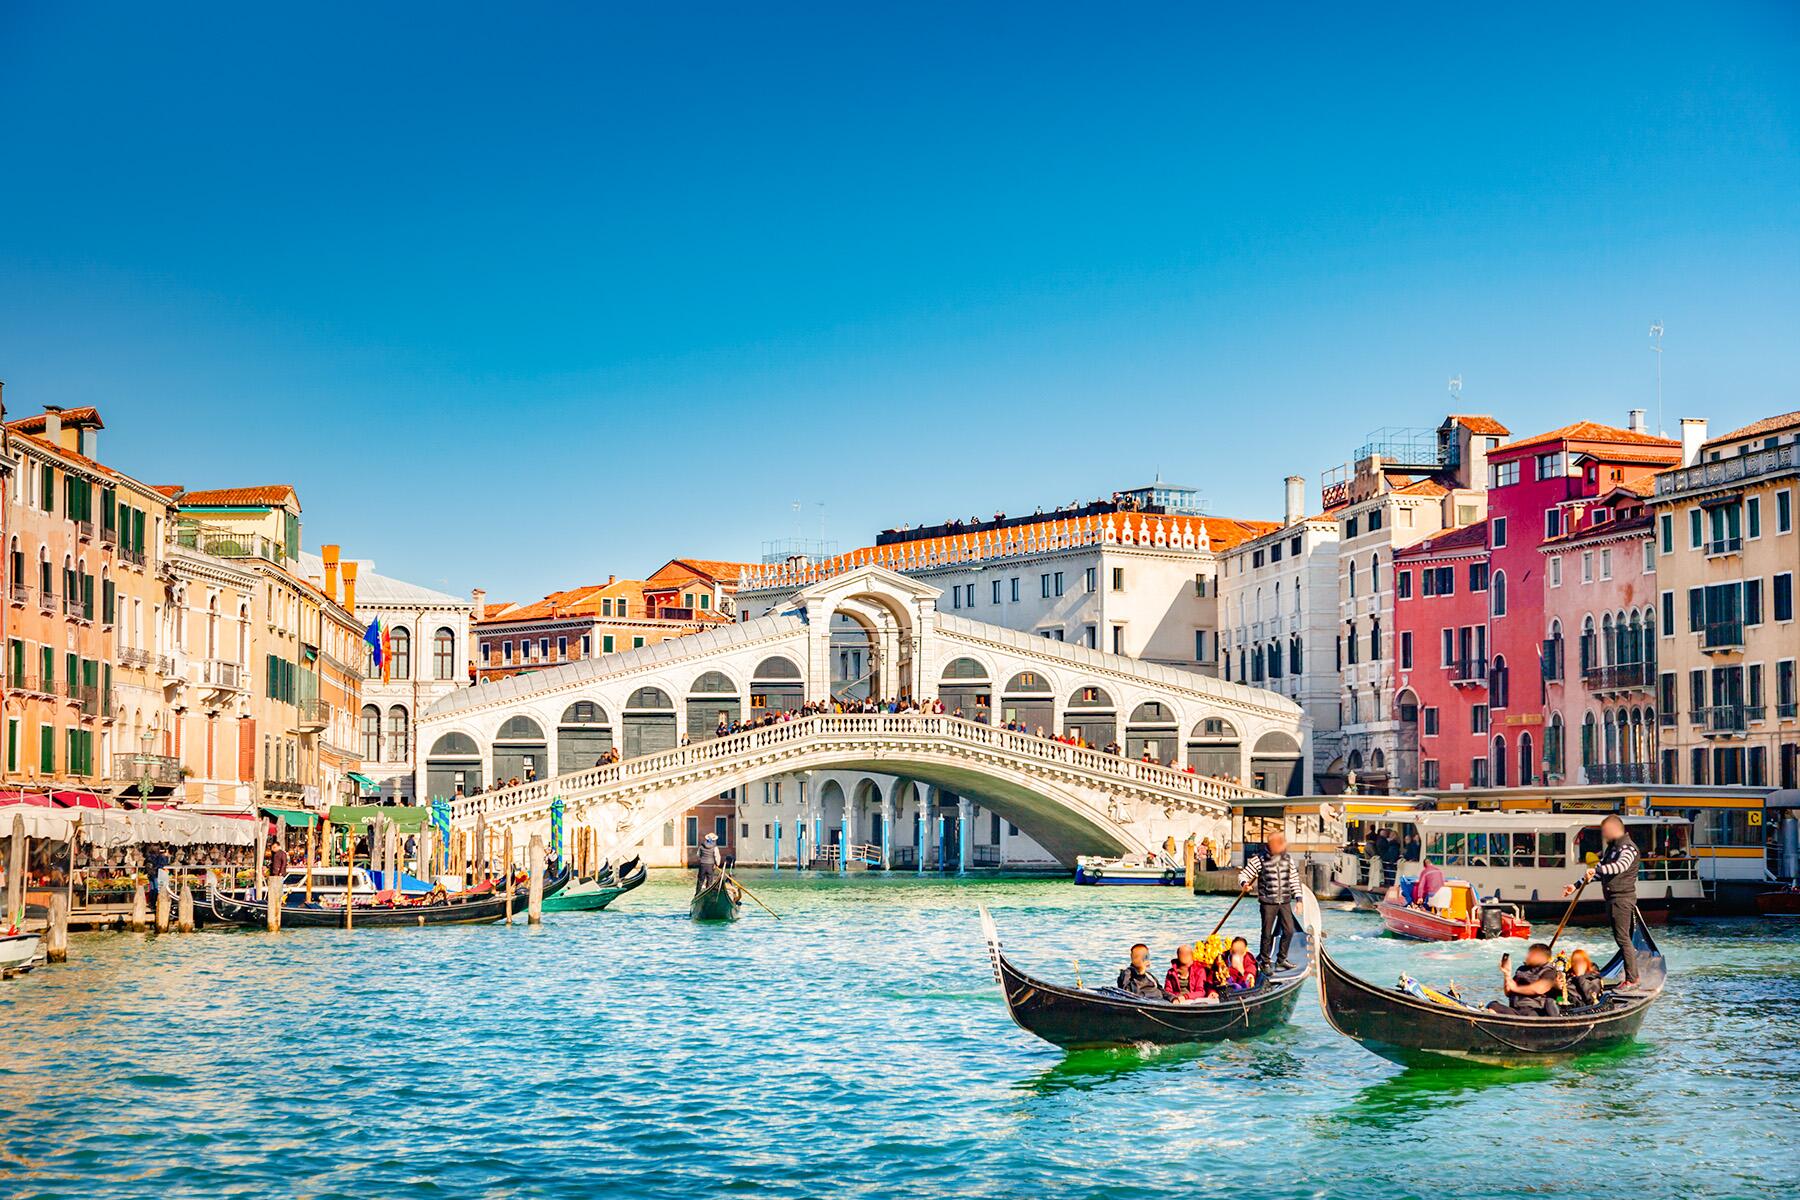 Gondolas gliding through the canals of Venice, Italy